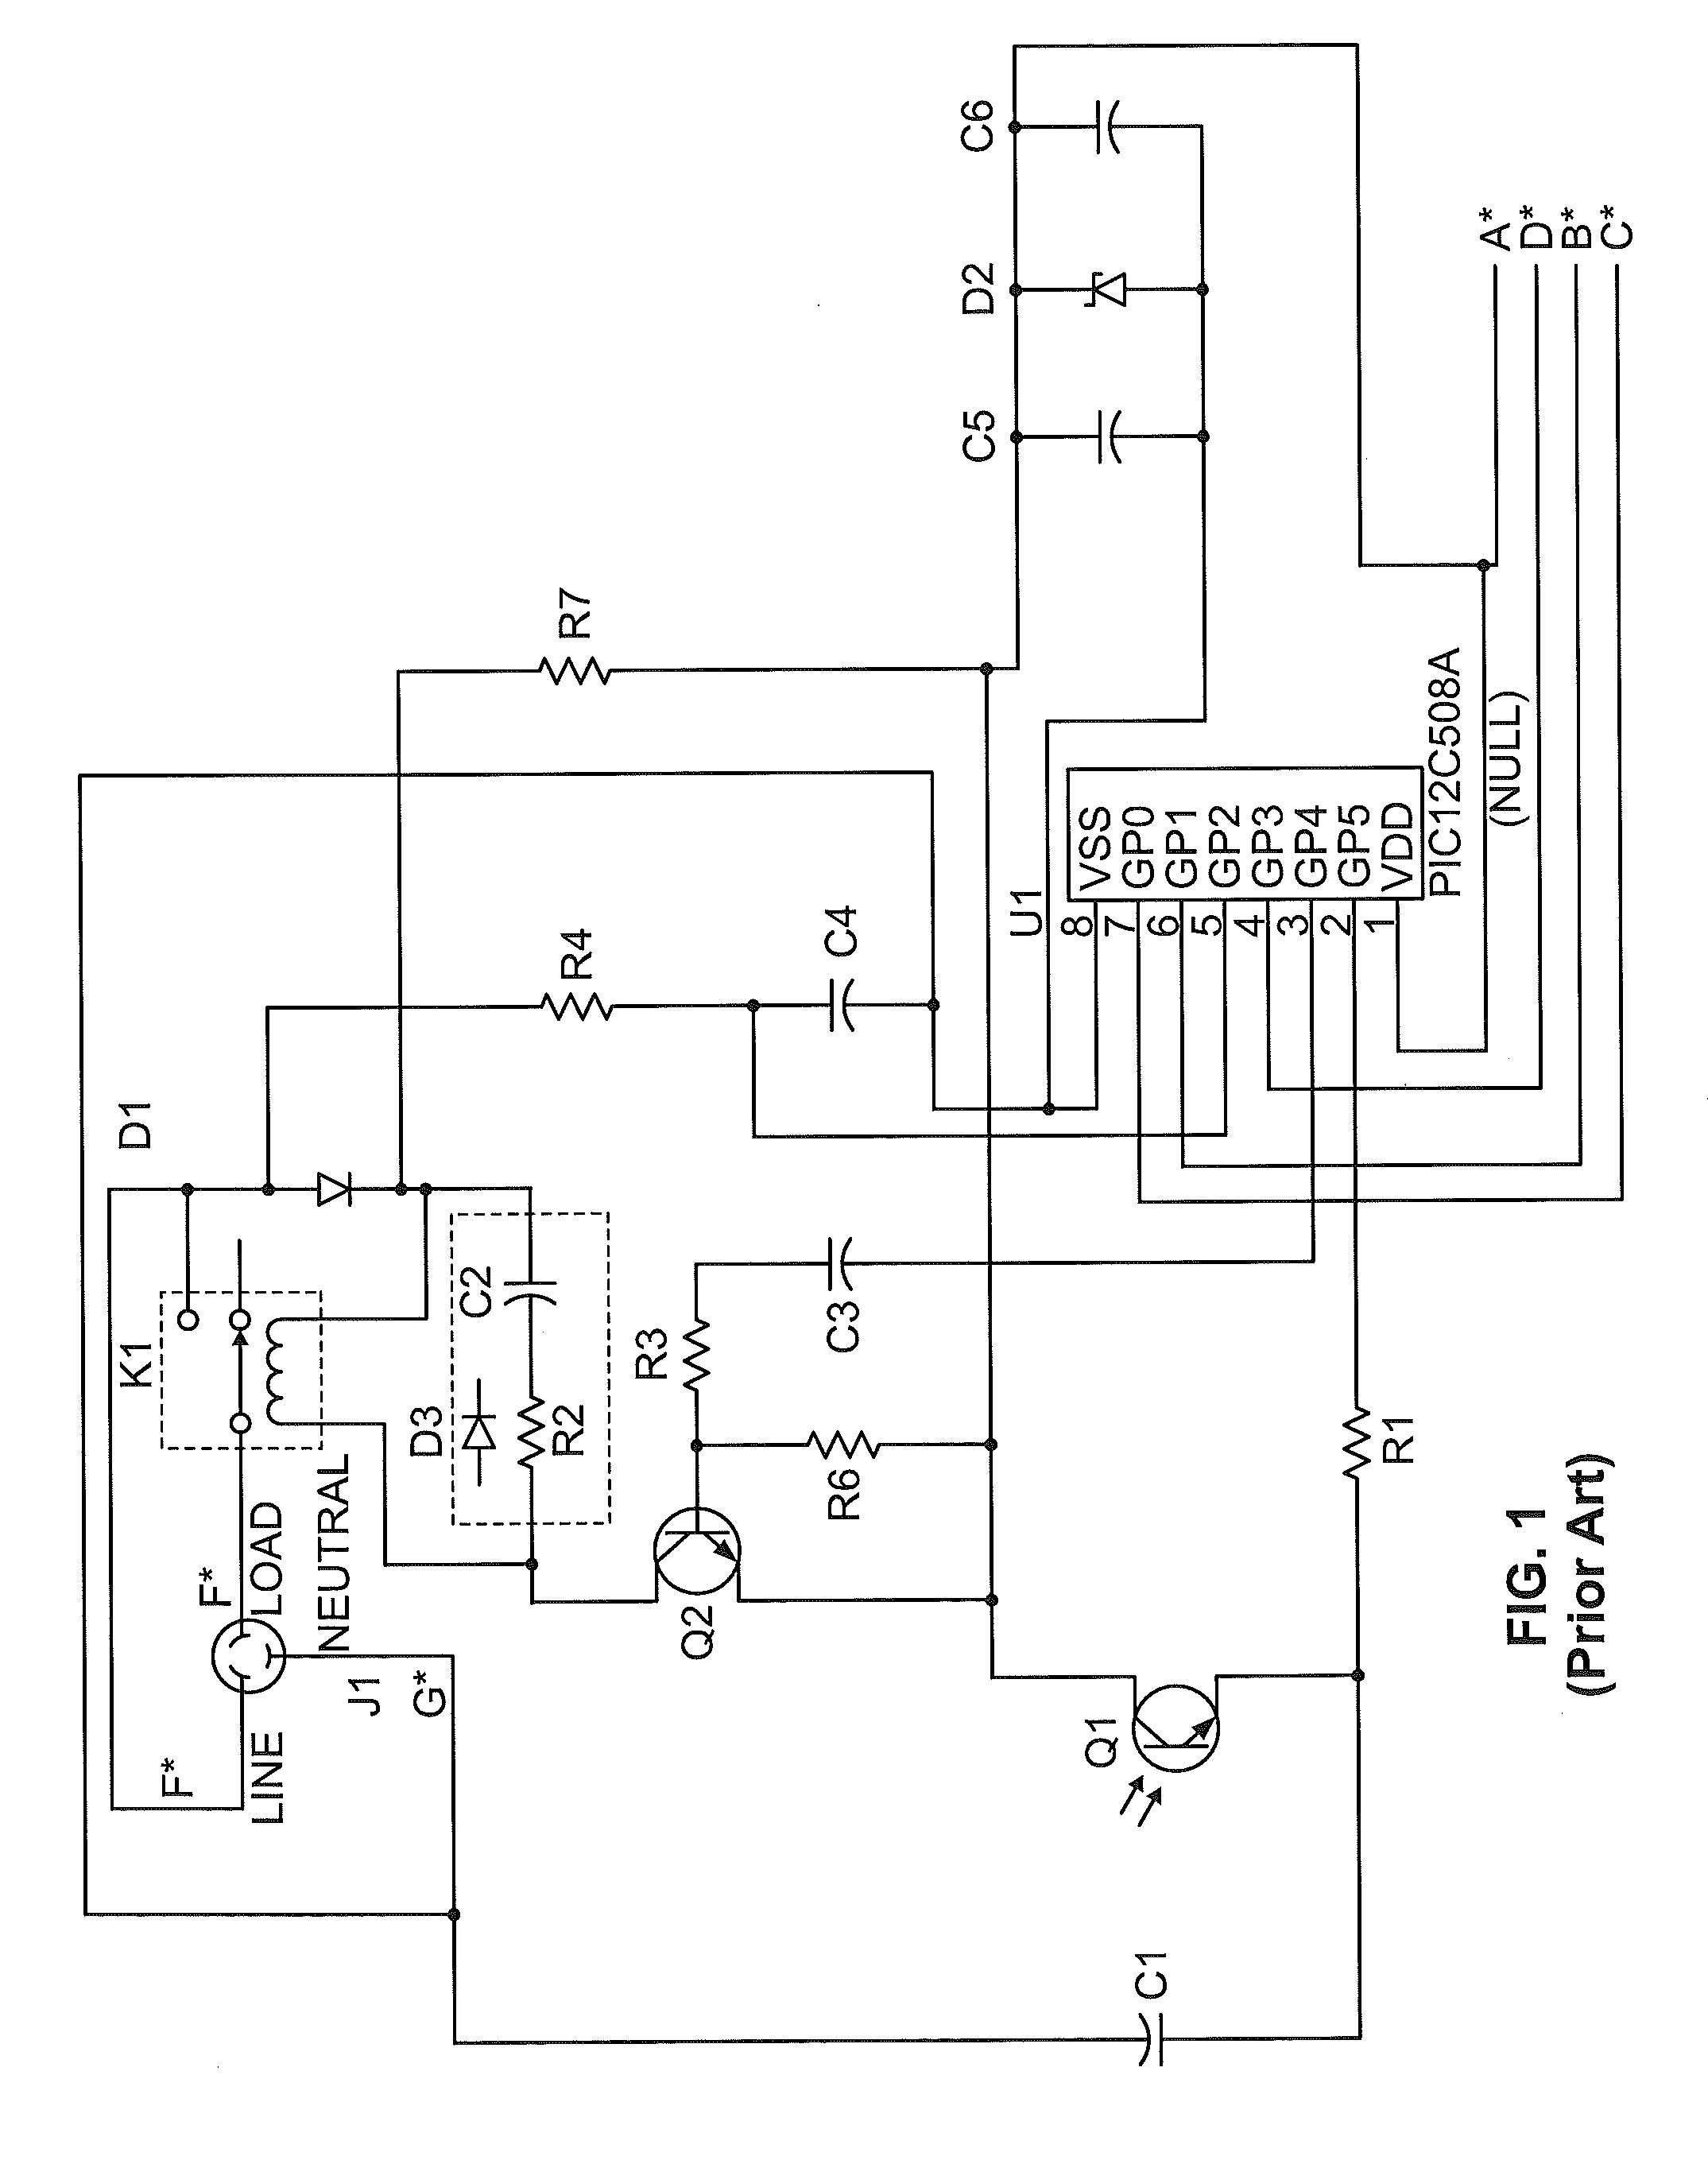 Photosensor circuits including a regulated power supply